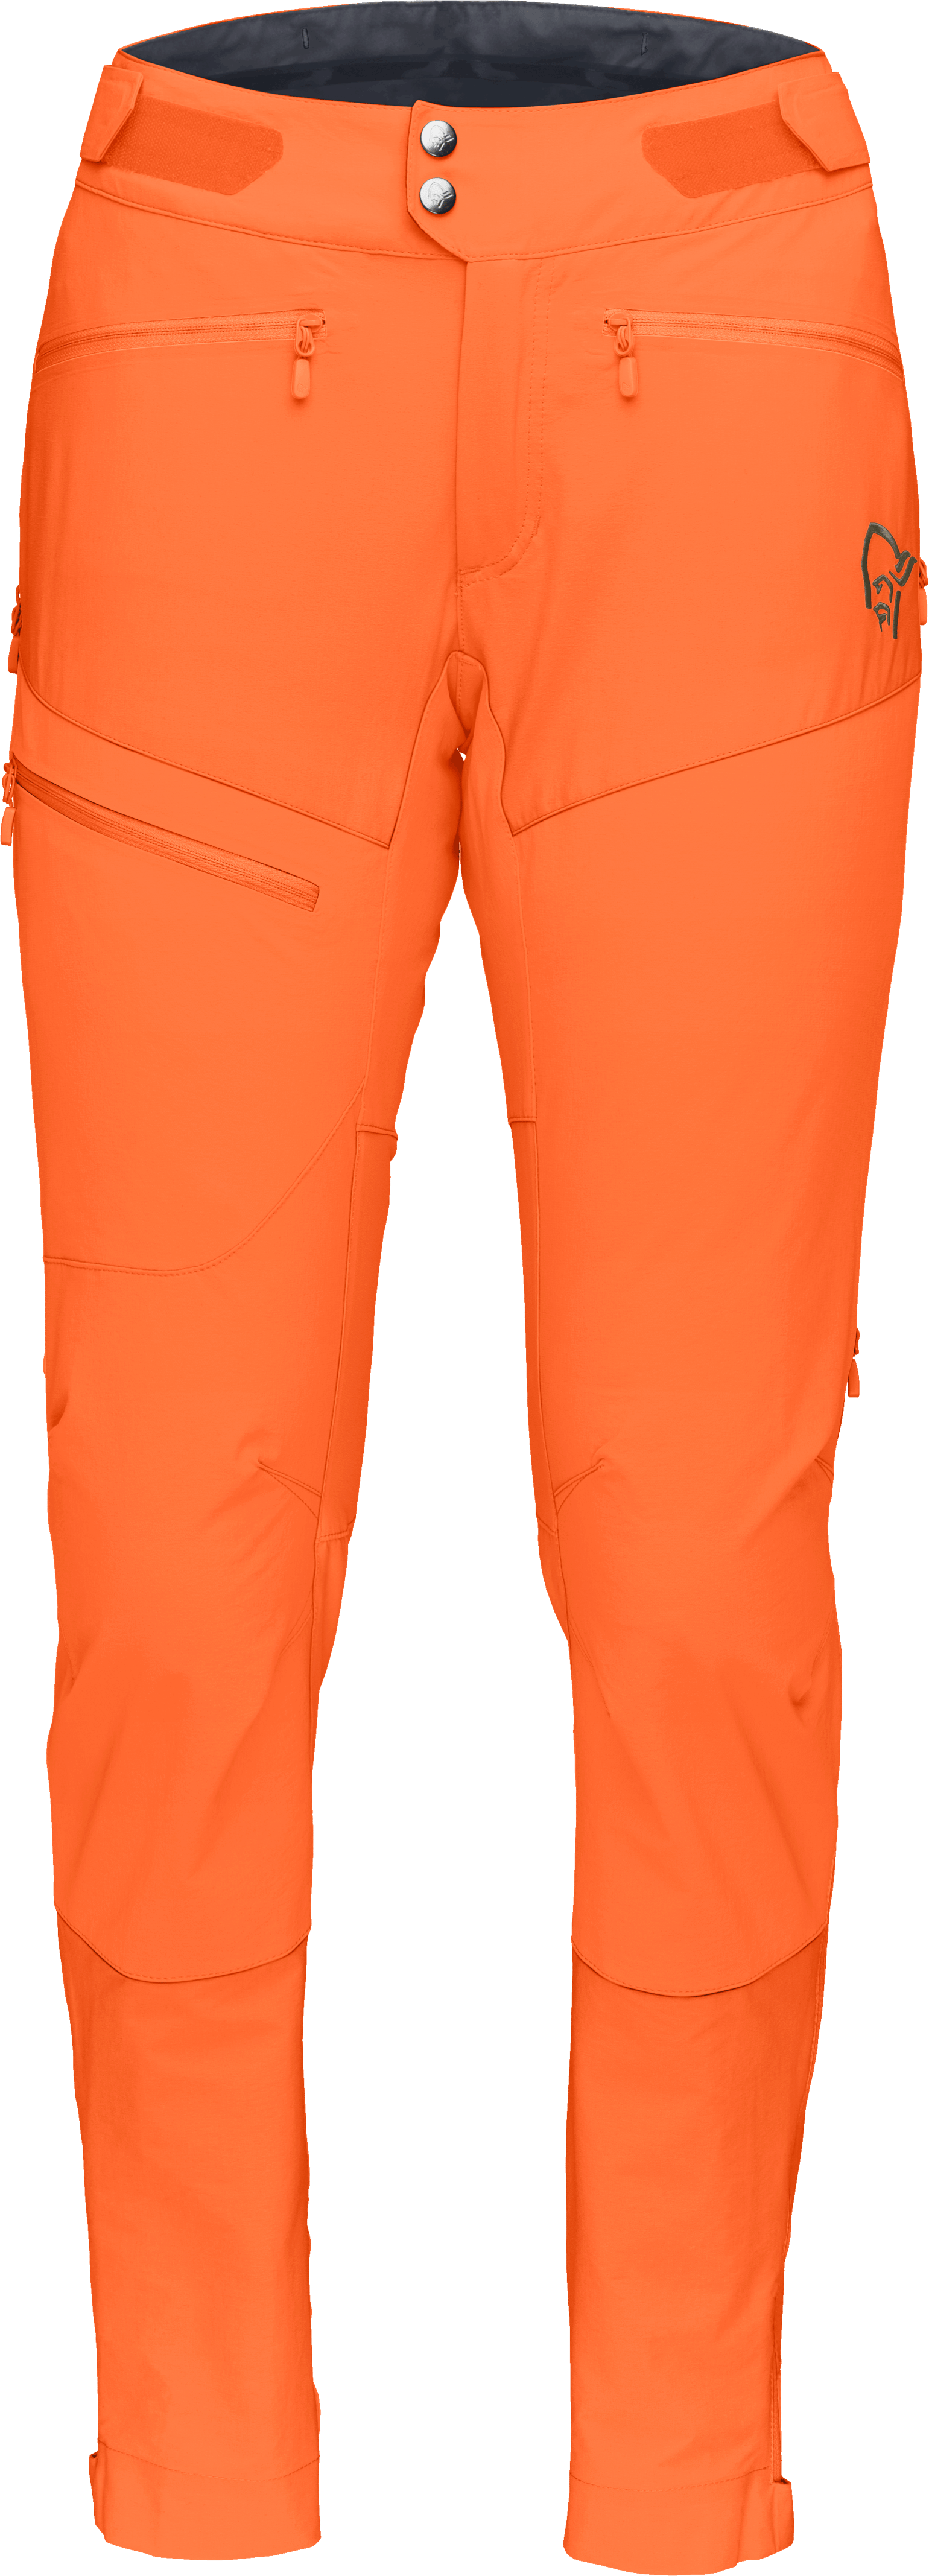 Norrøna Women's Fjørå Flex1 Pants Orange Alert